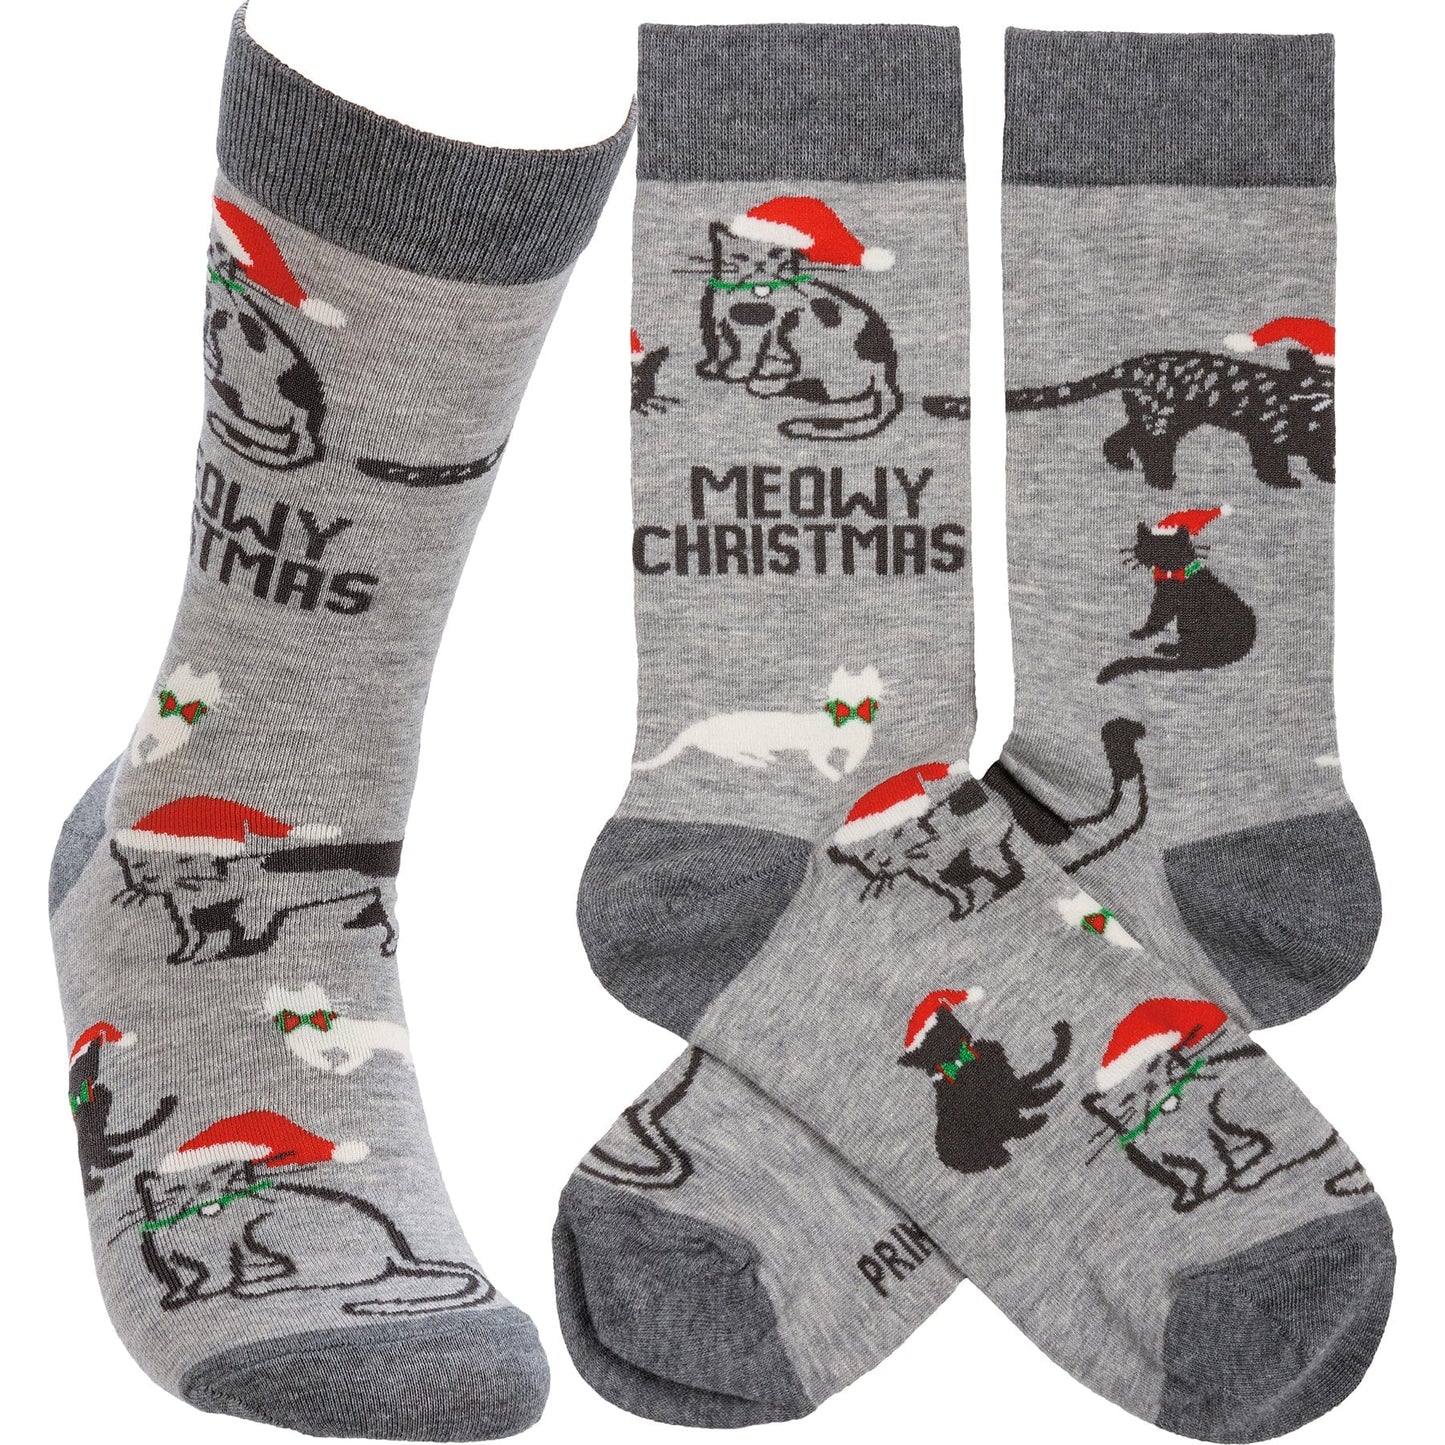 Socks One Size Fits Most Socks - Meowy Christmas PBK-113515